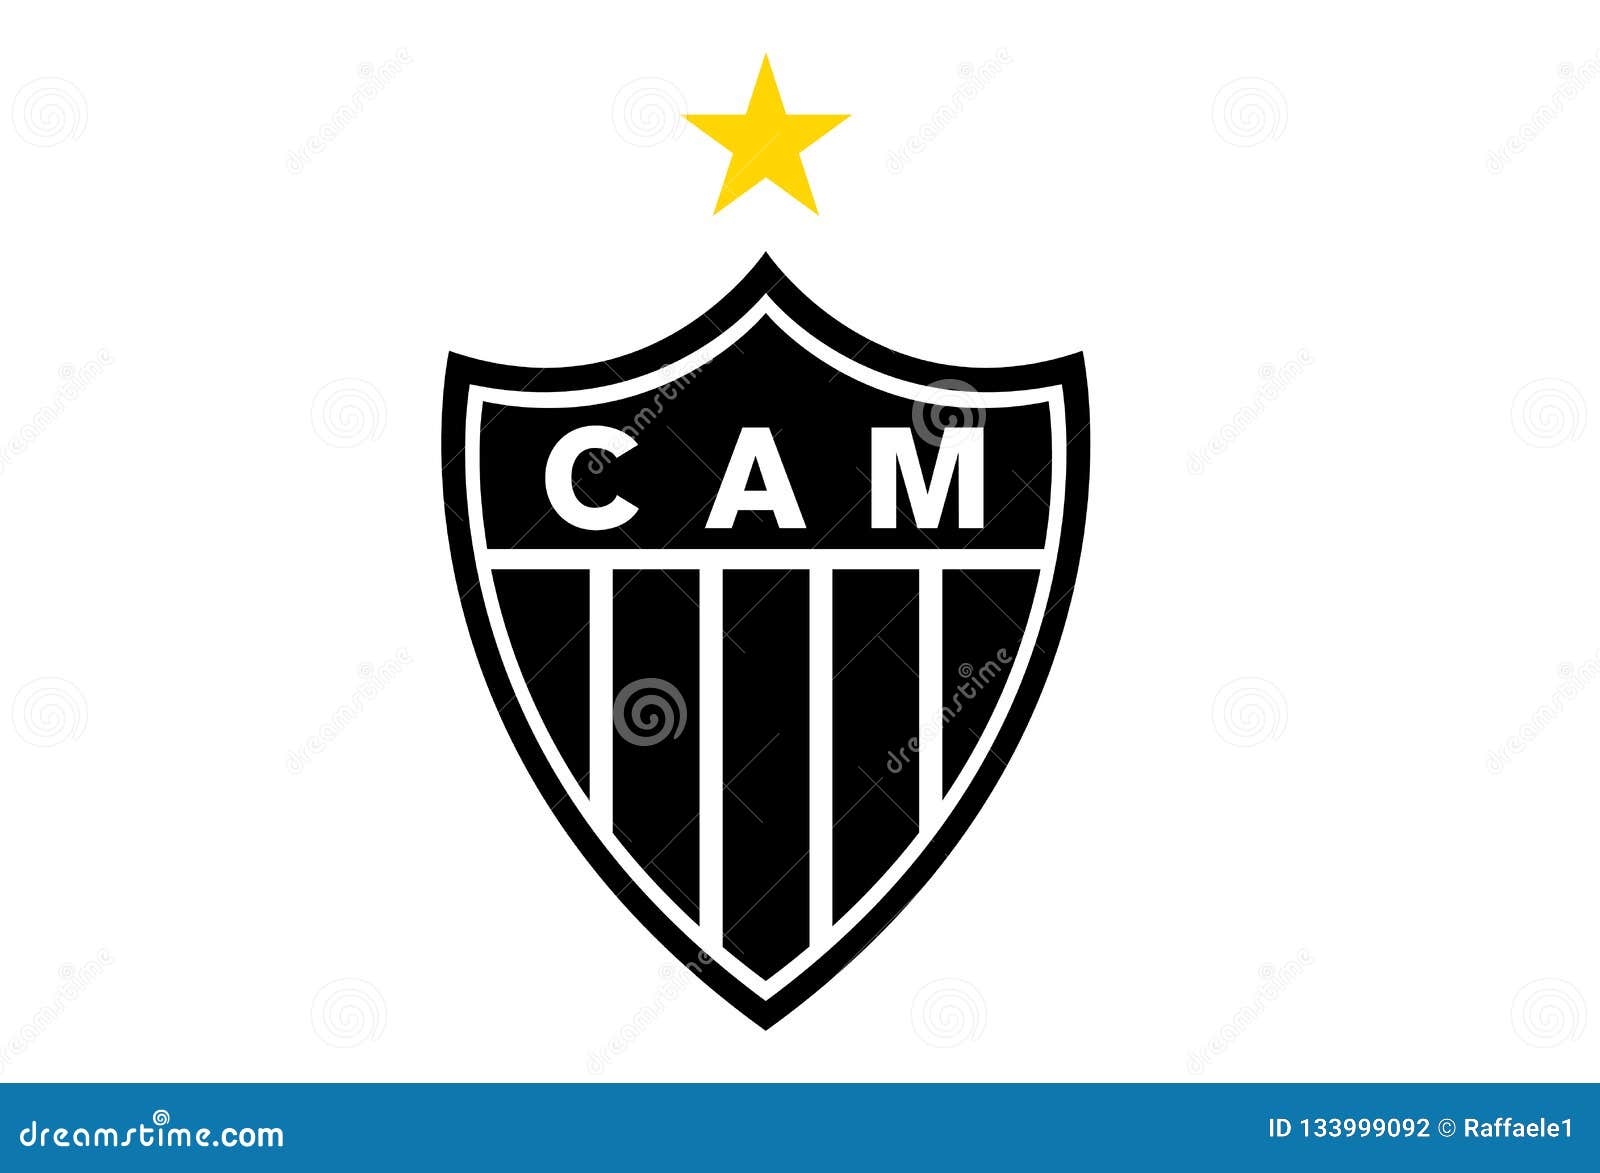 Clube Atletico Mineiro Brazil Soccer Football Car Bumper Sticker Decal 4'' x 5''